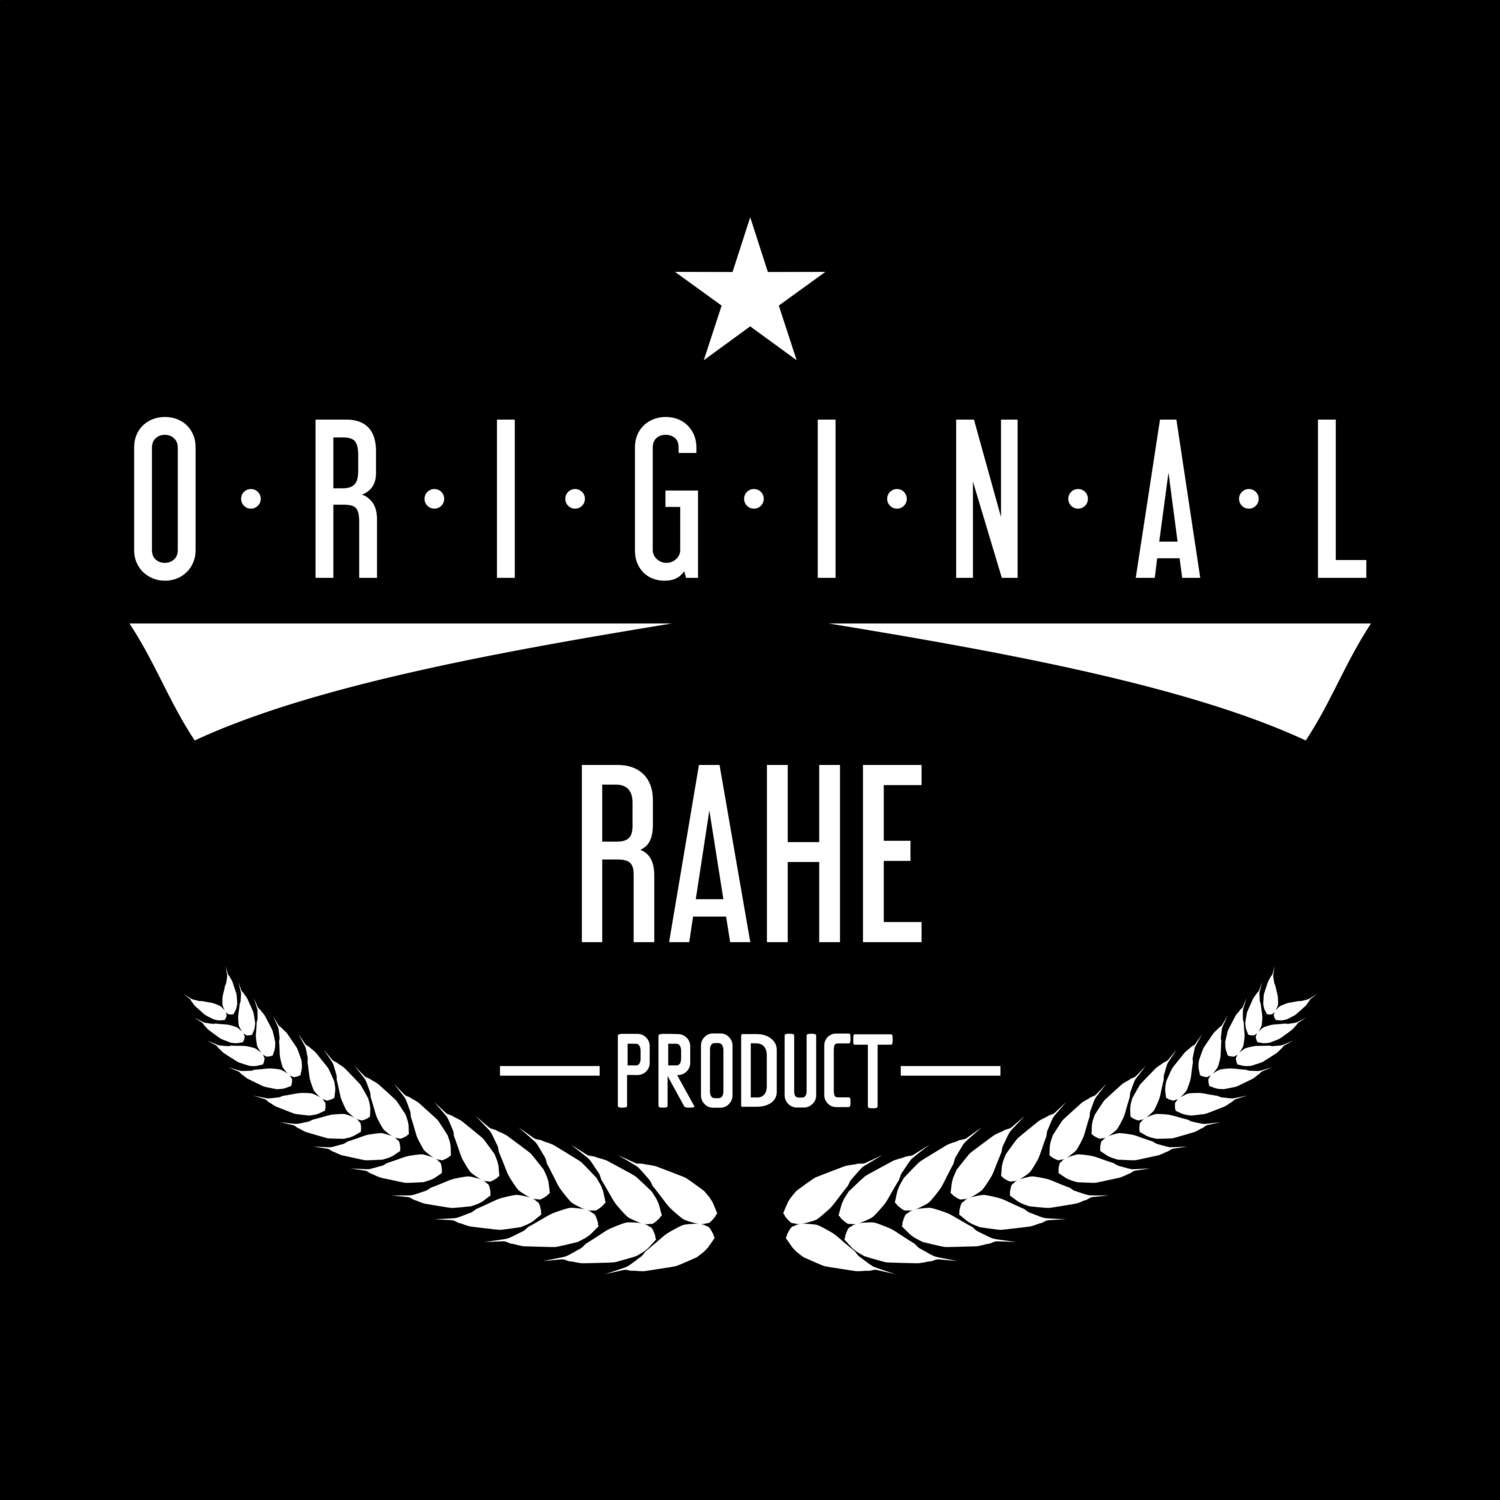 Rahe T-Shirt »Original Product«